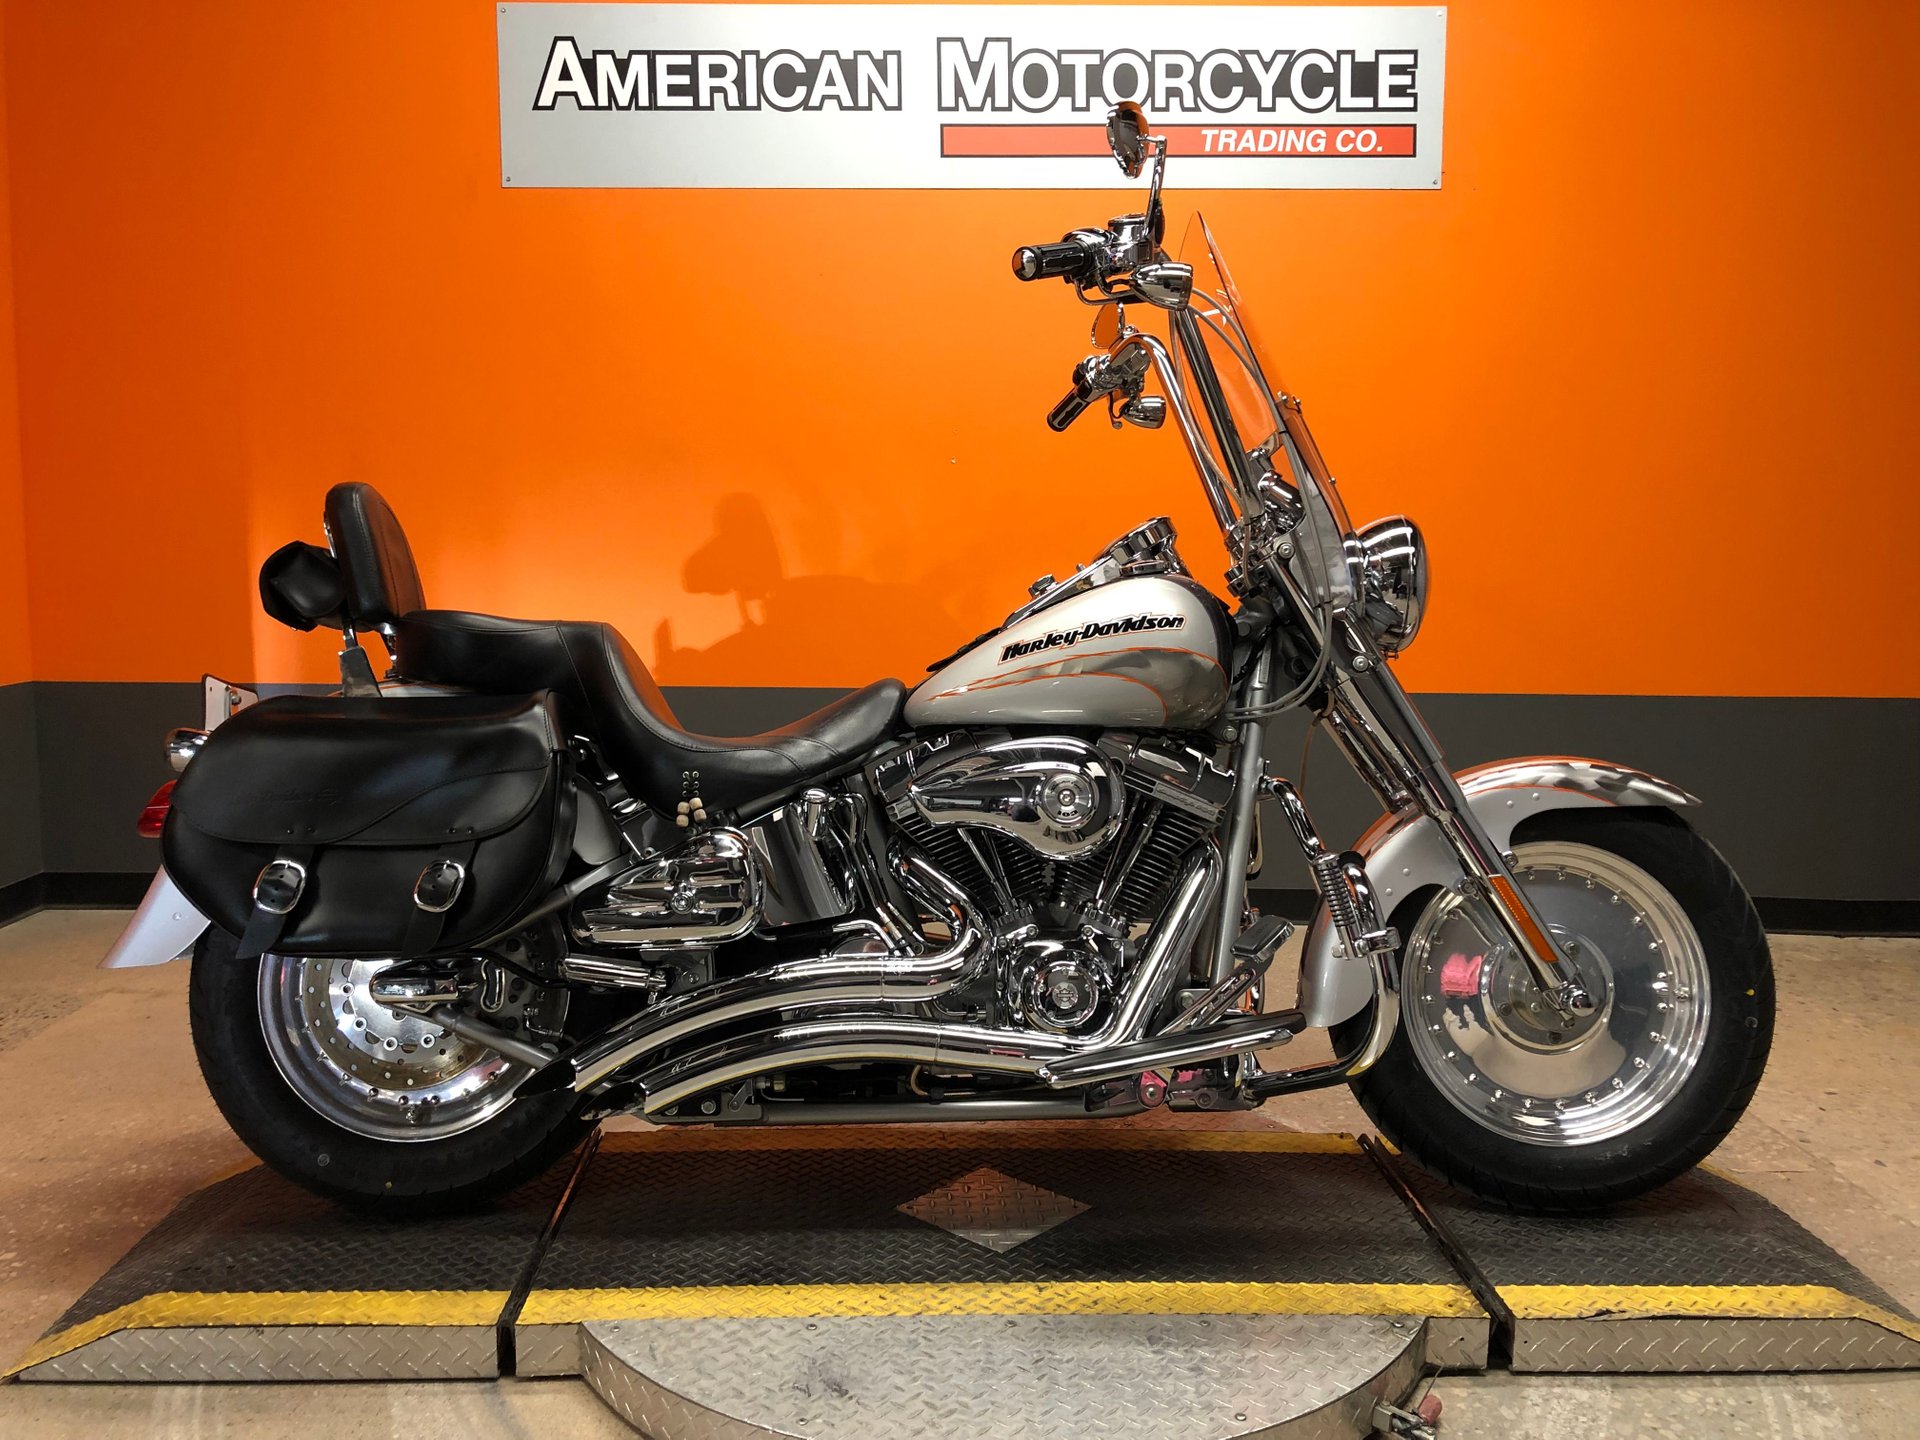 2005 Harley Davidson Cvo Fat Boy American Motorcycle Trading Company Used Harley Davidson Motorcycles